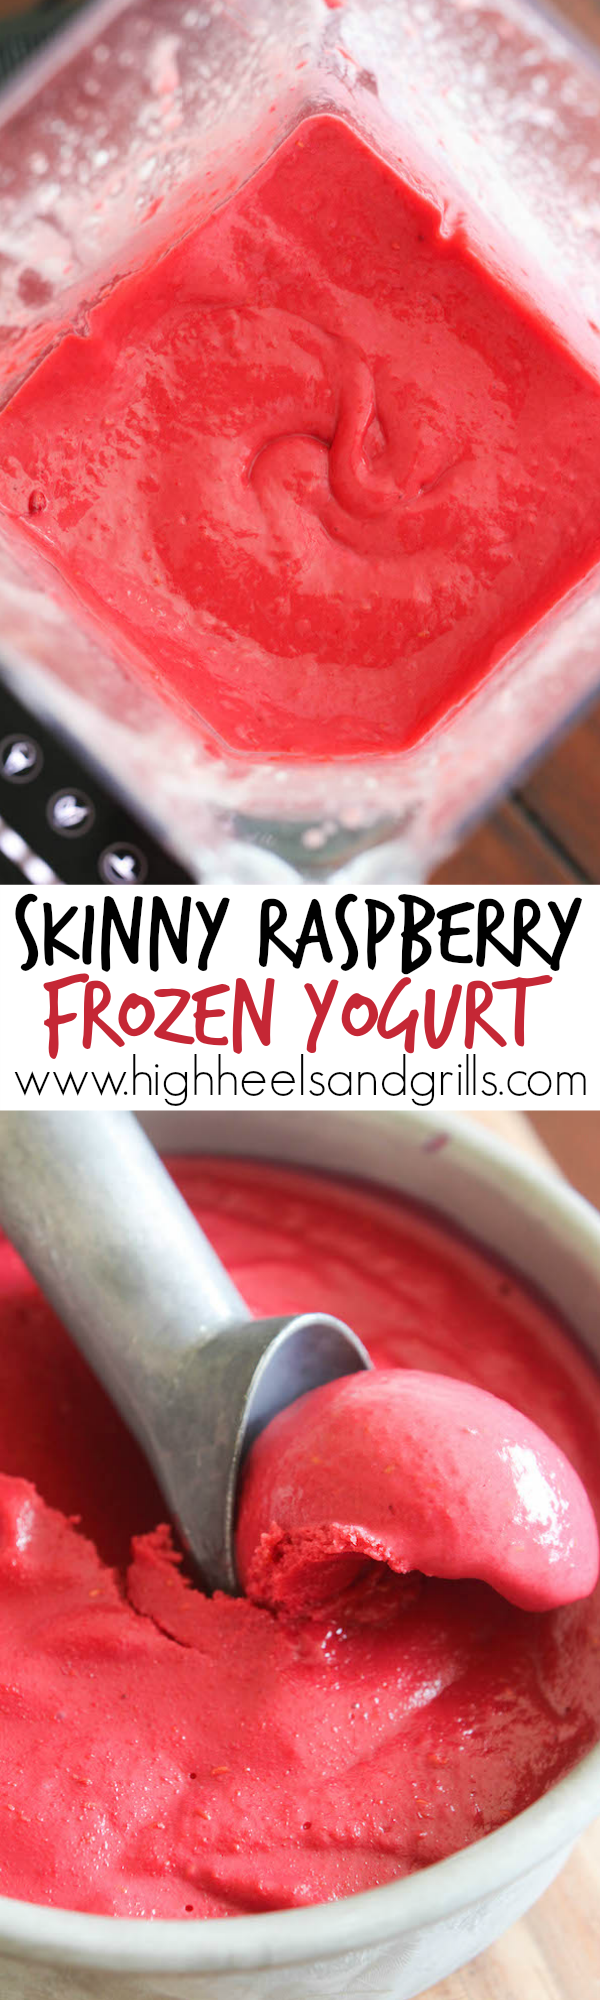 Skinny Raspberry Frozen Yogurt Collage Final